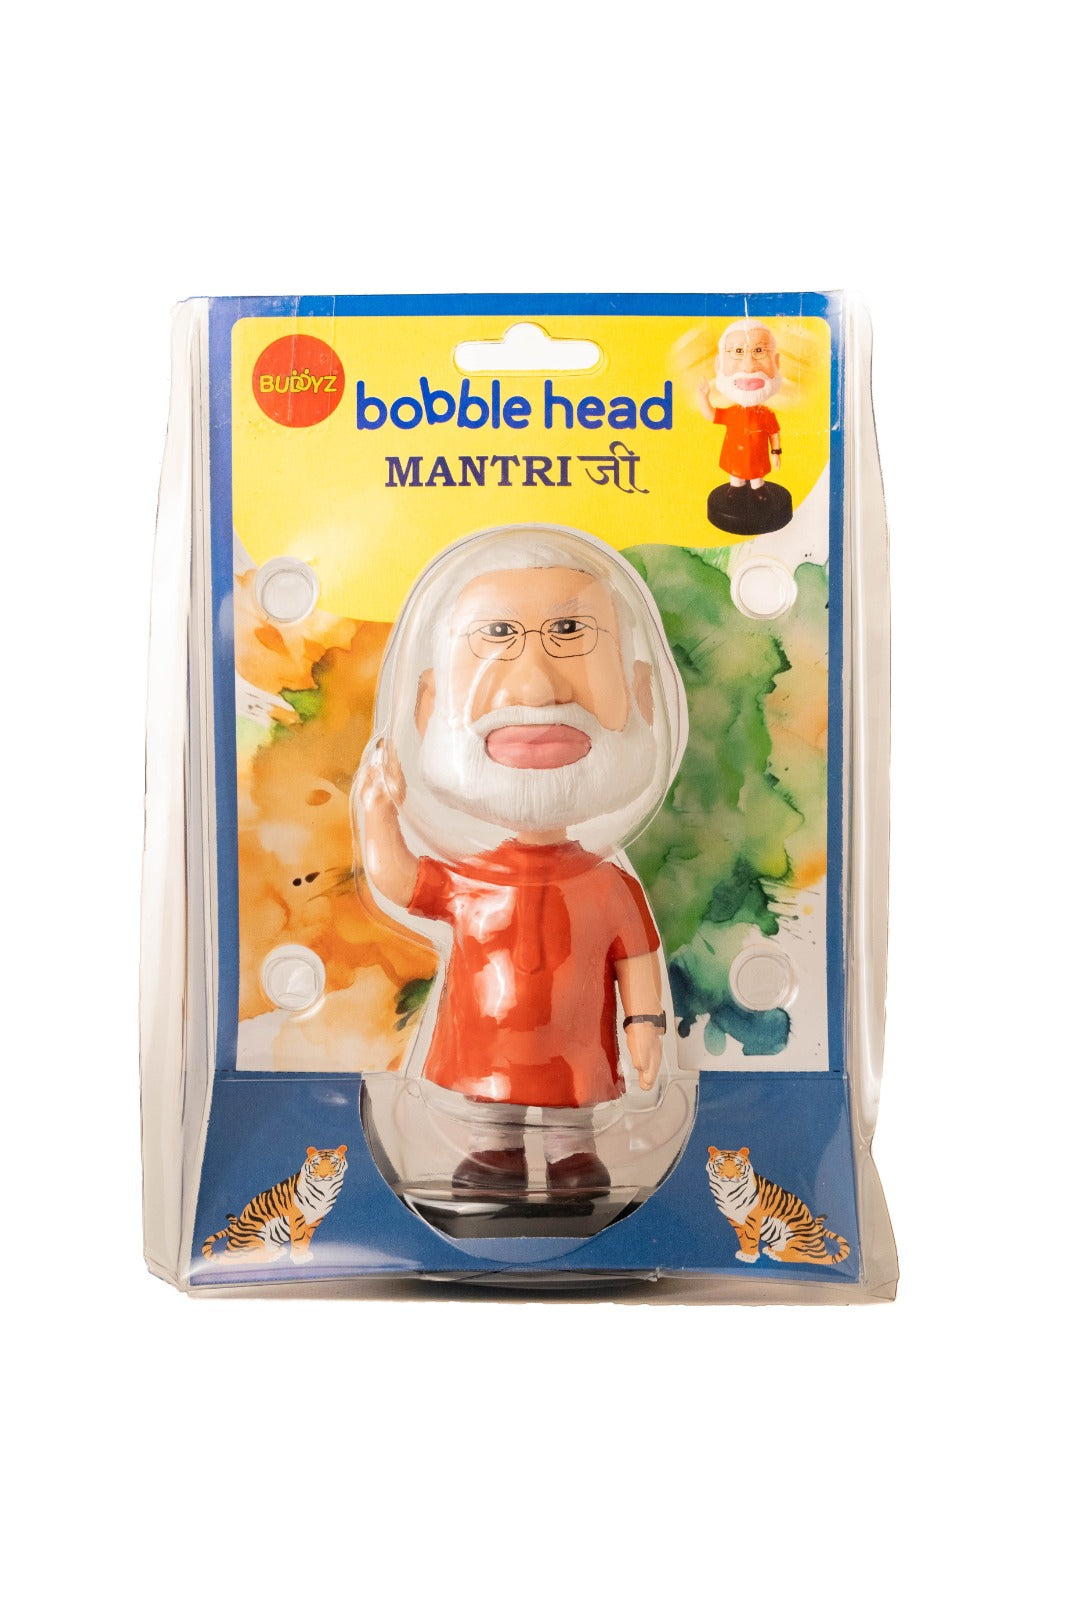 New Mantriji bobblehead